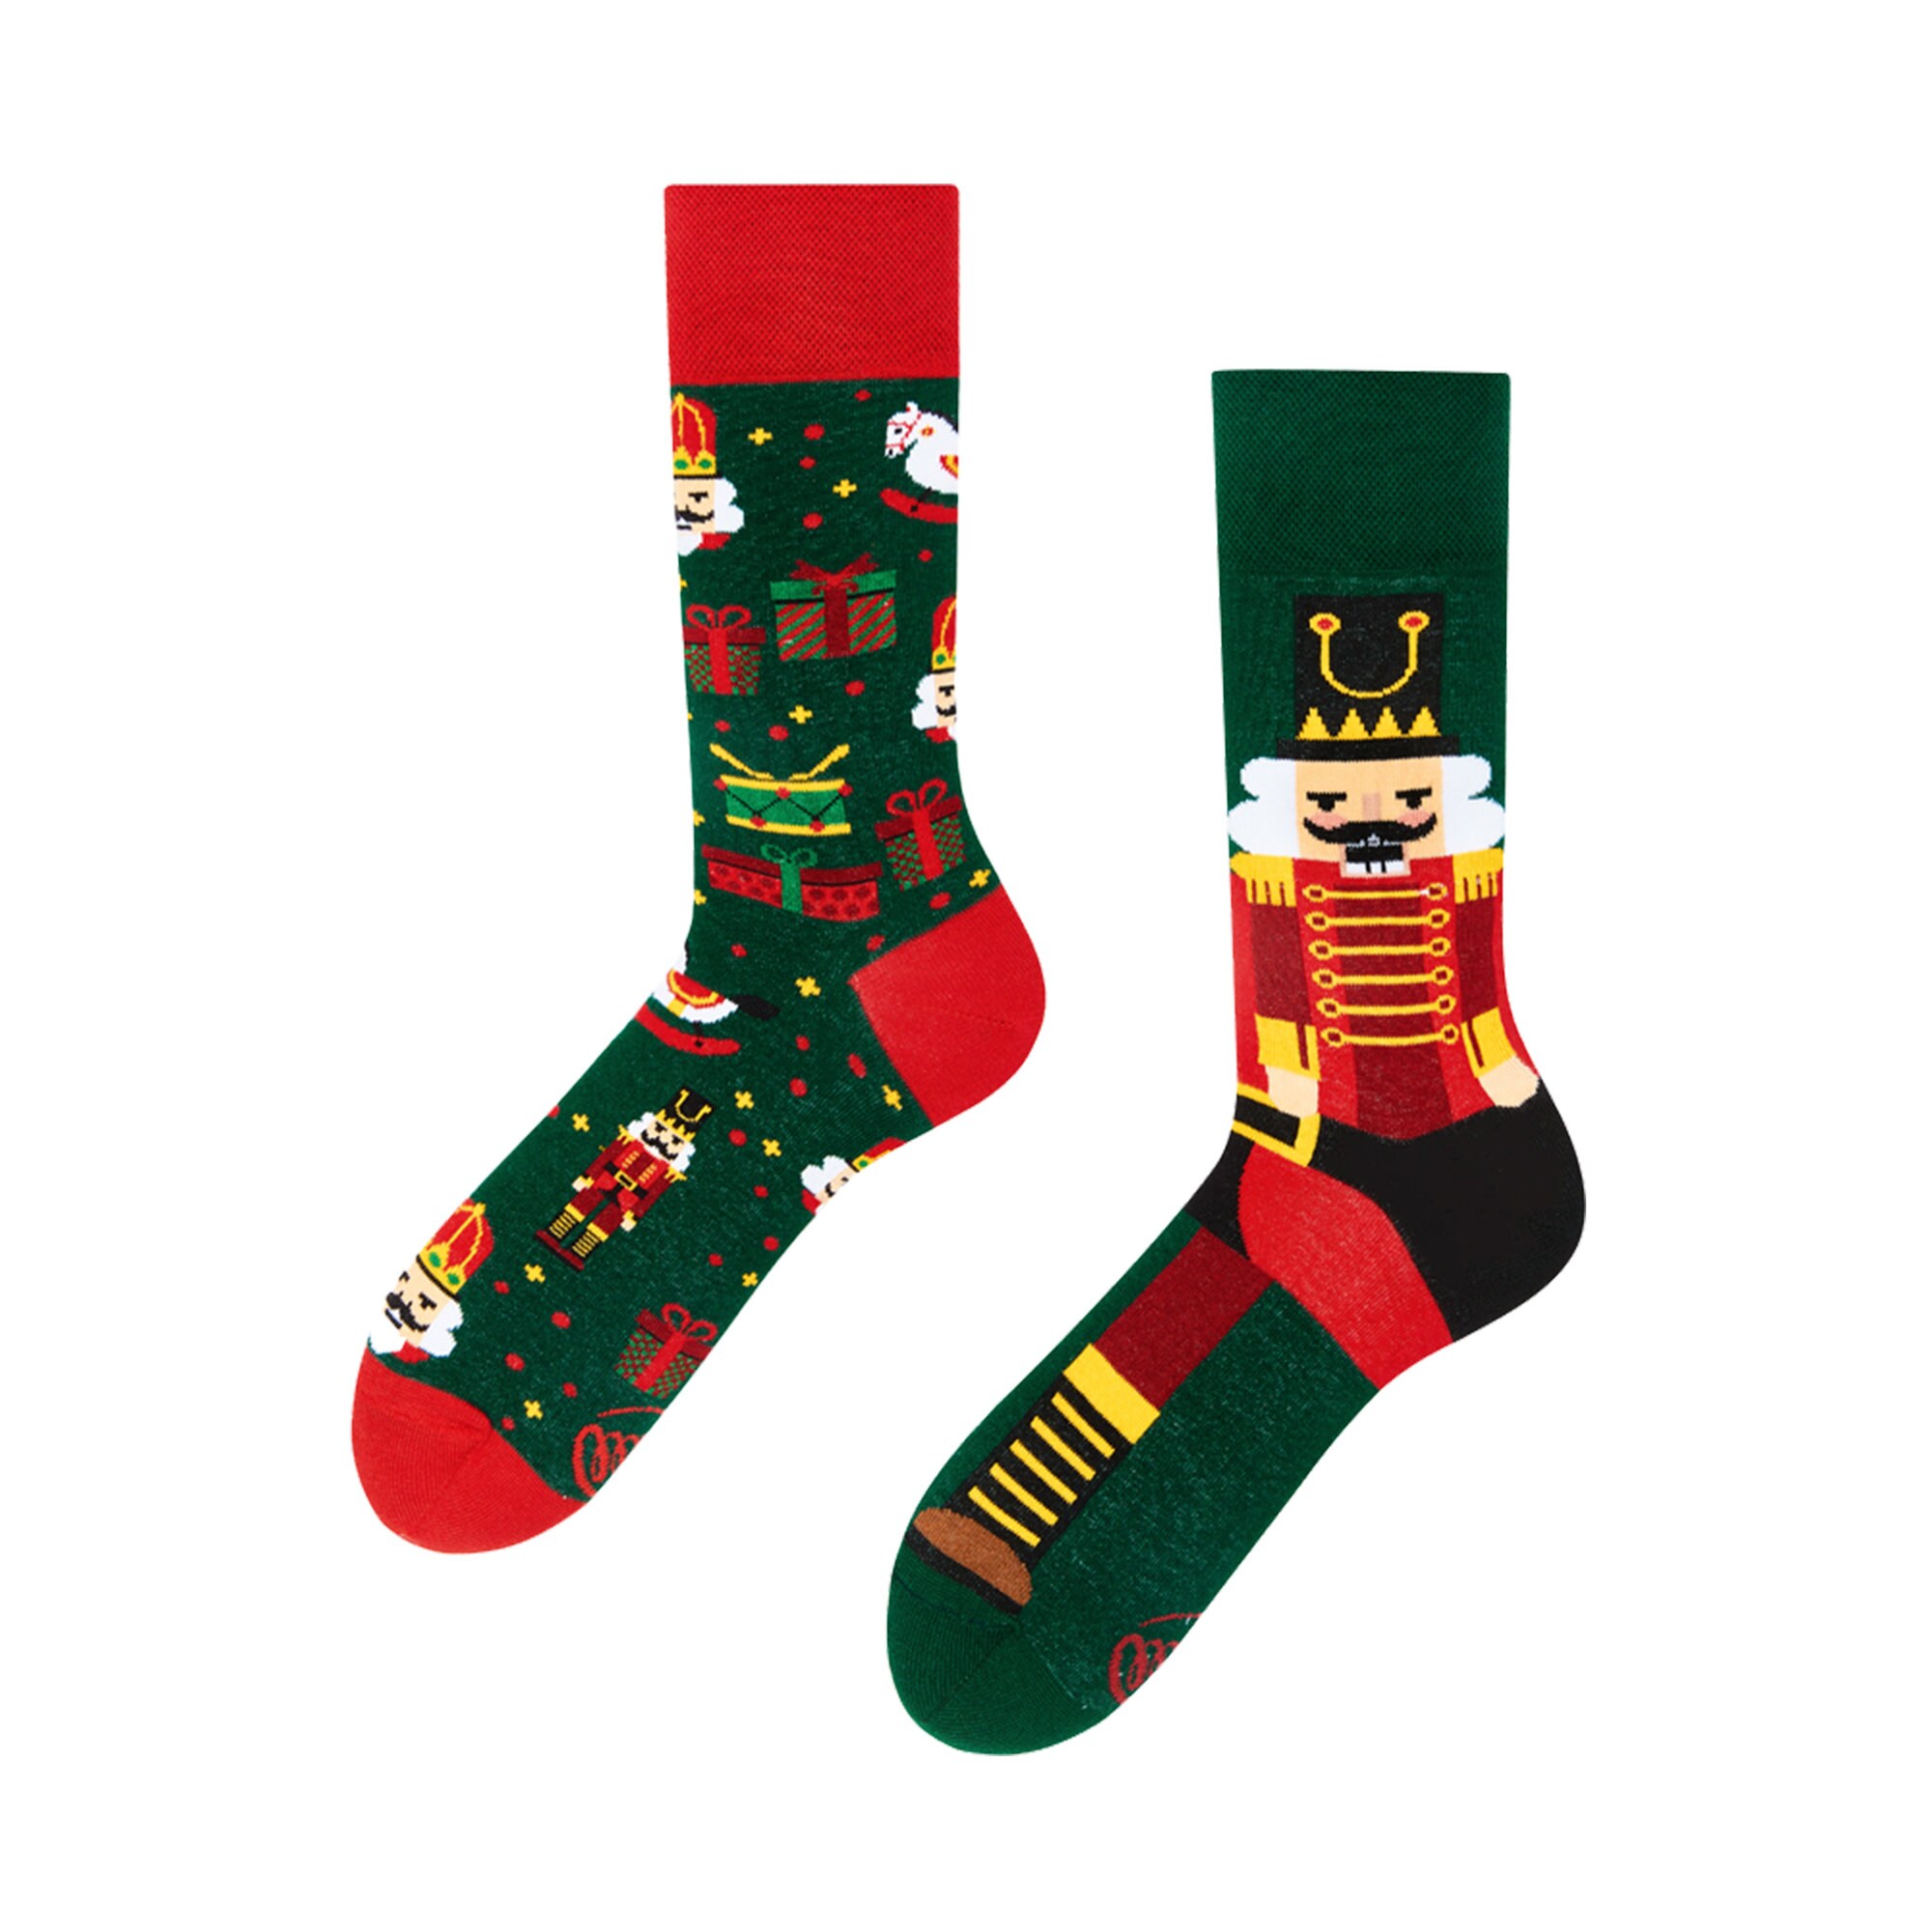 The Nutcracker Socks men socks colorful socks mismatched | Etsy